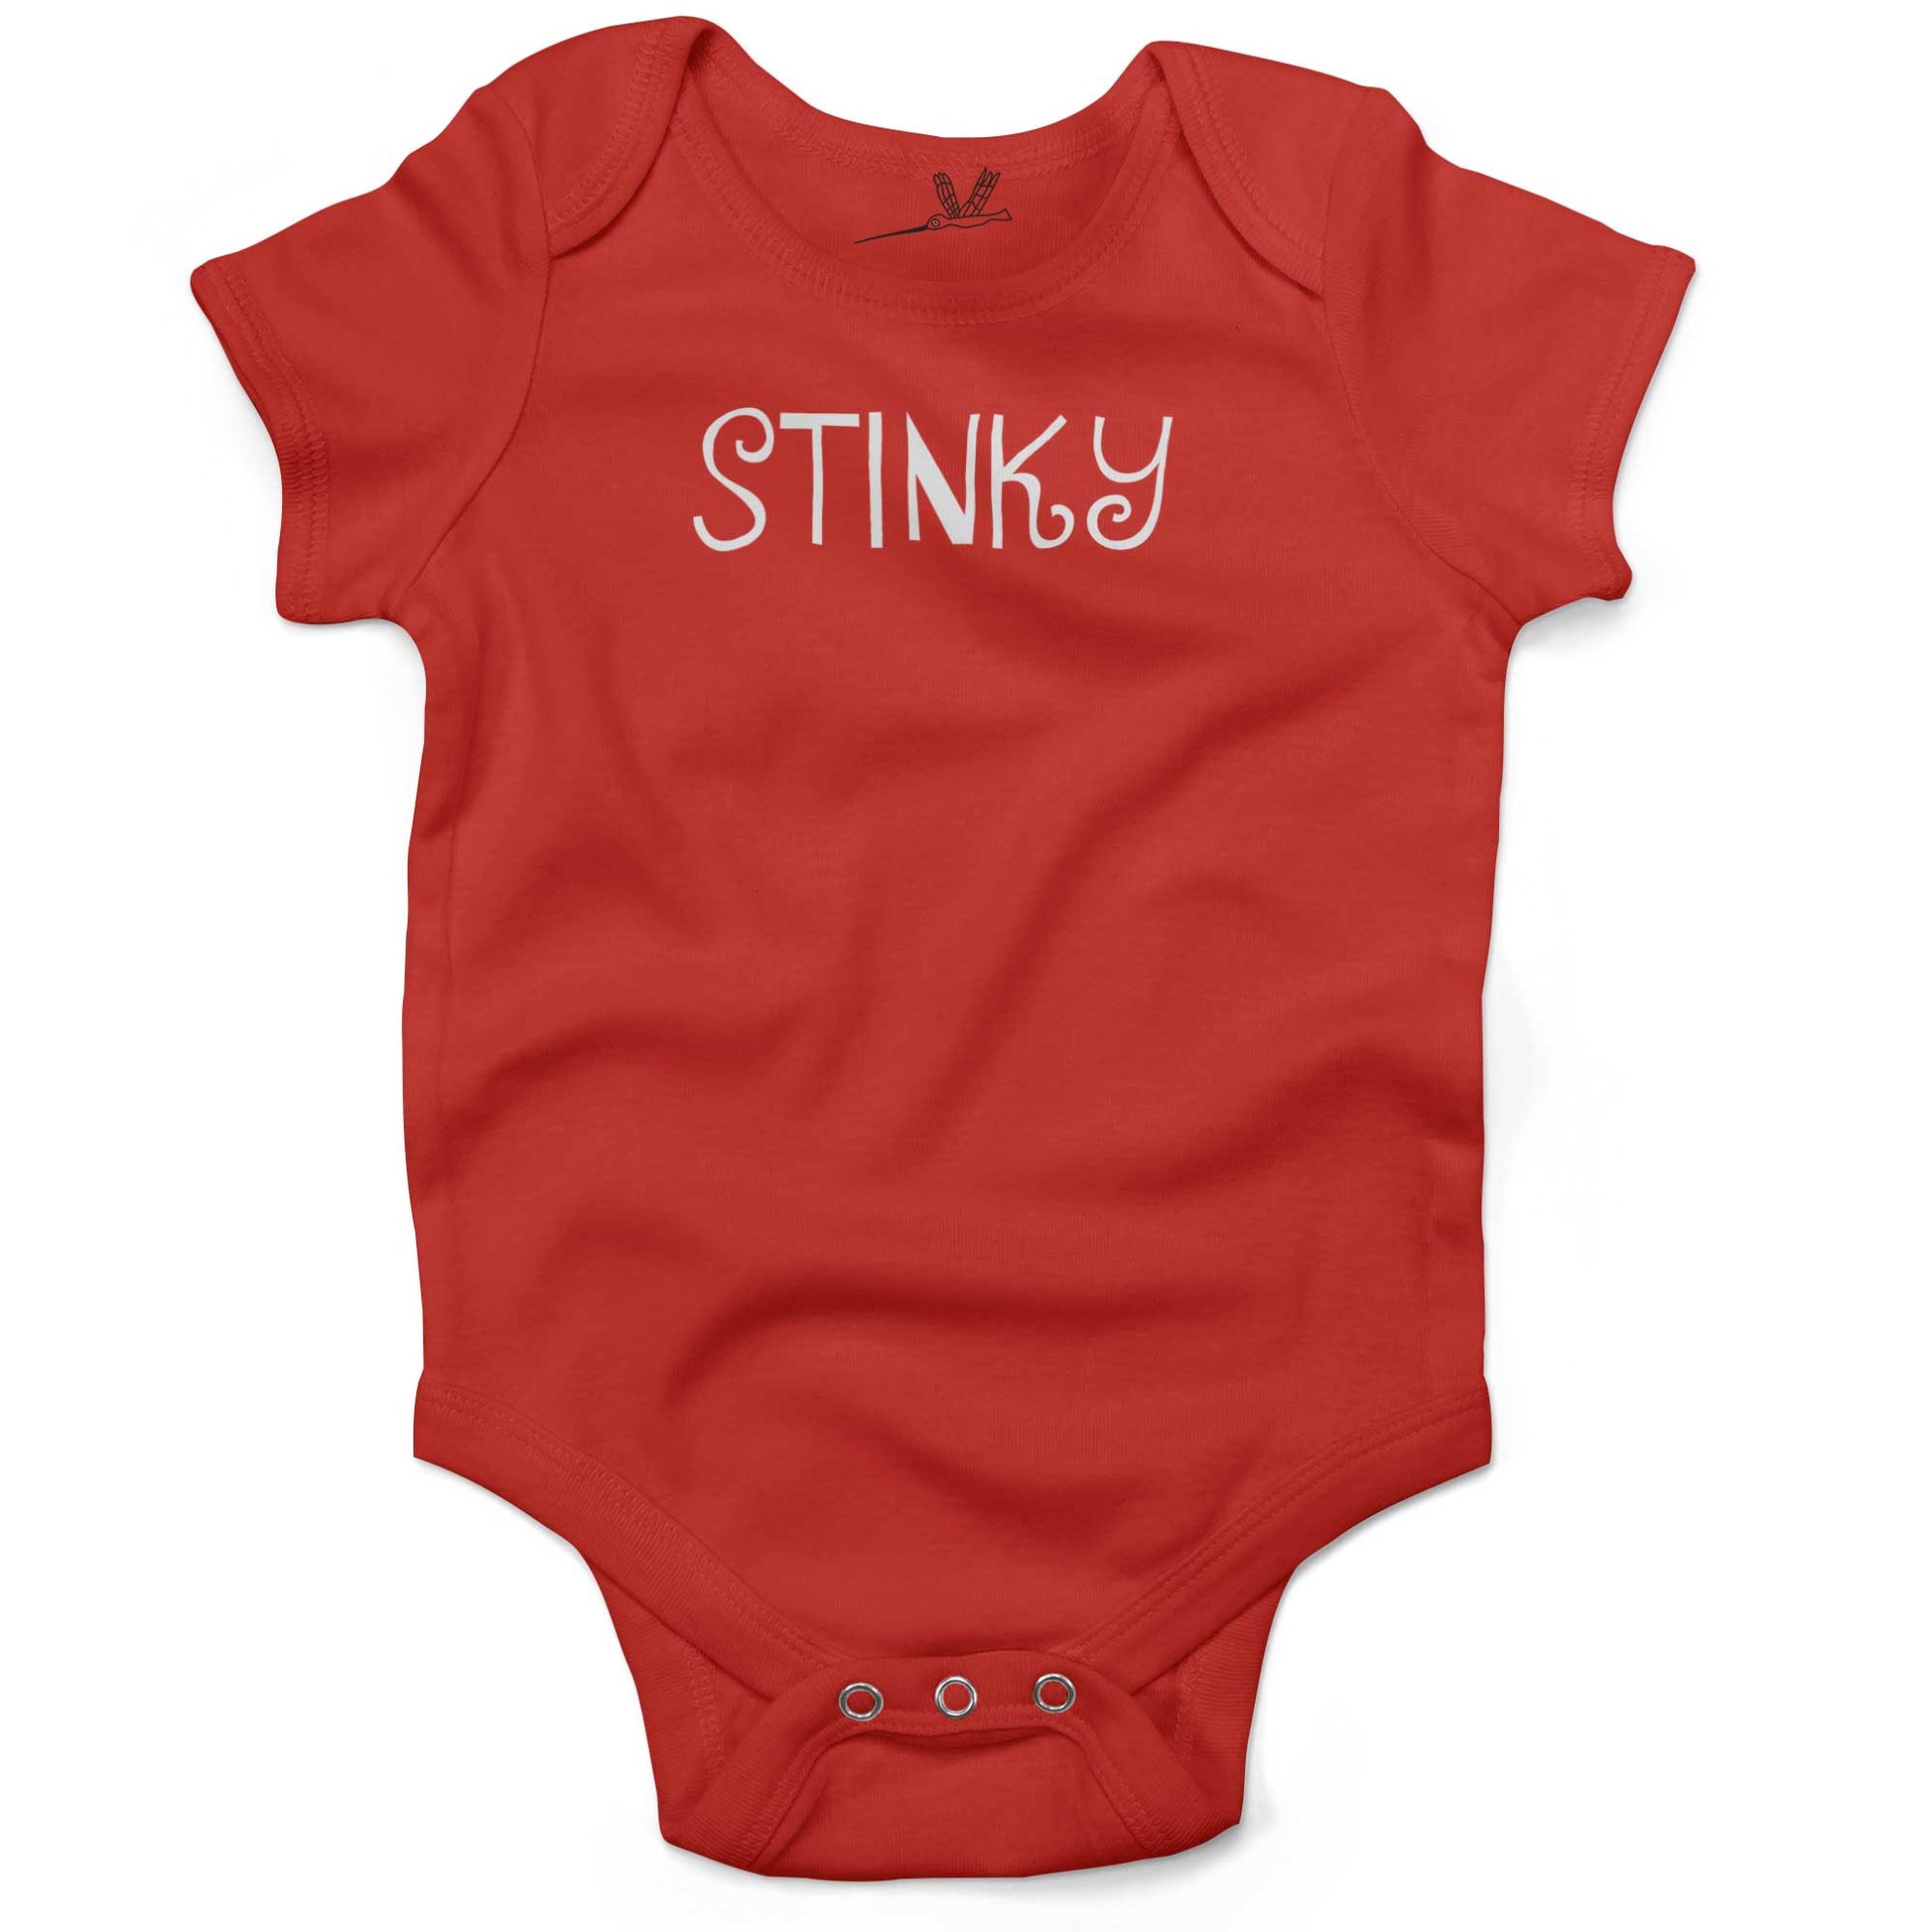 Stinky Infant Bodysuit or Raglan Baby Tee-Organic Red-3-6 months